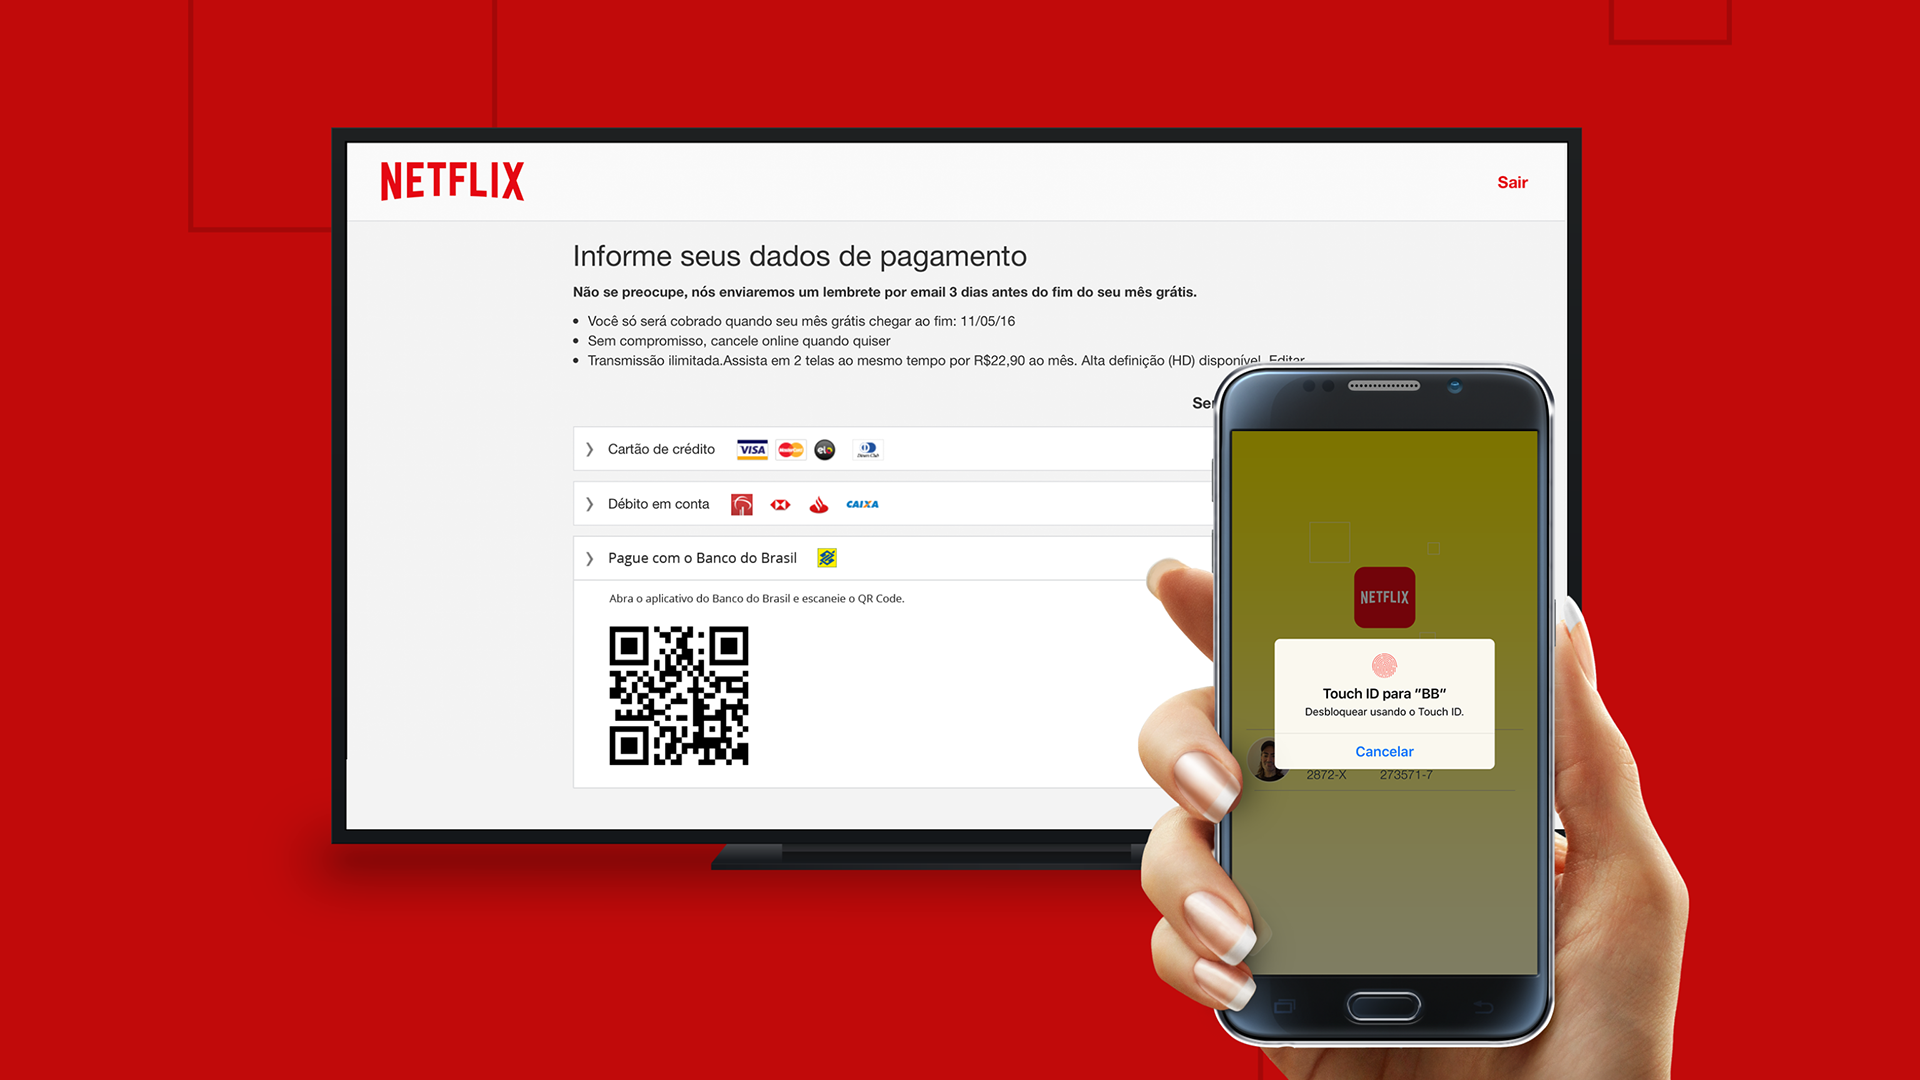 B Design - Banco do Brasil e Netflix